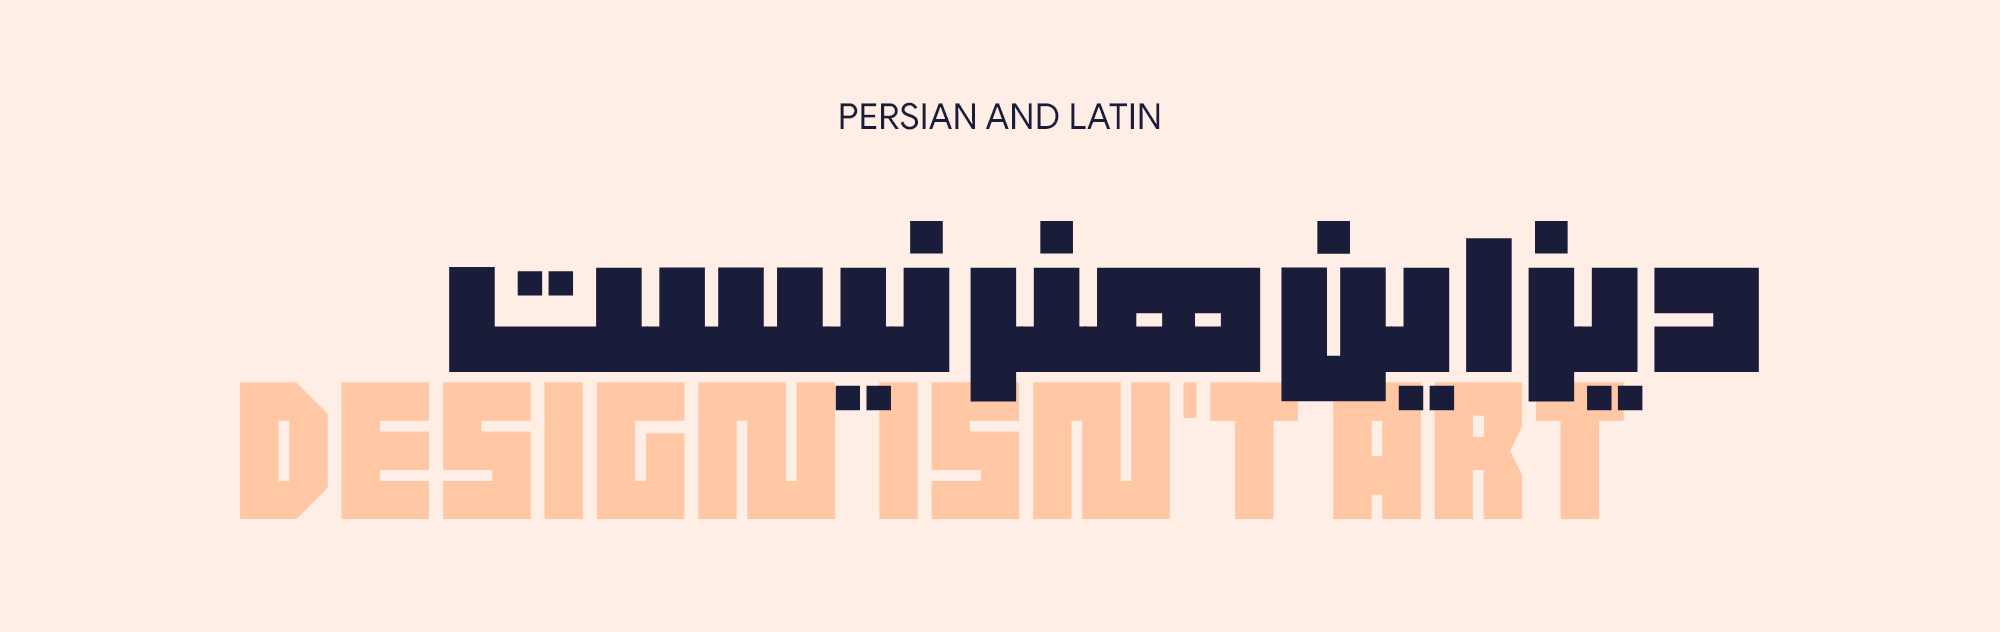 PERSIAN VS LATIN